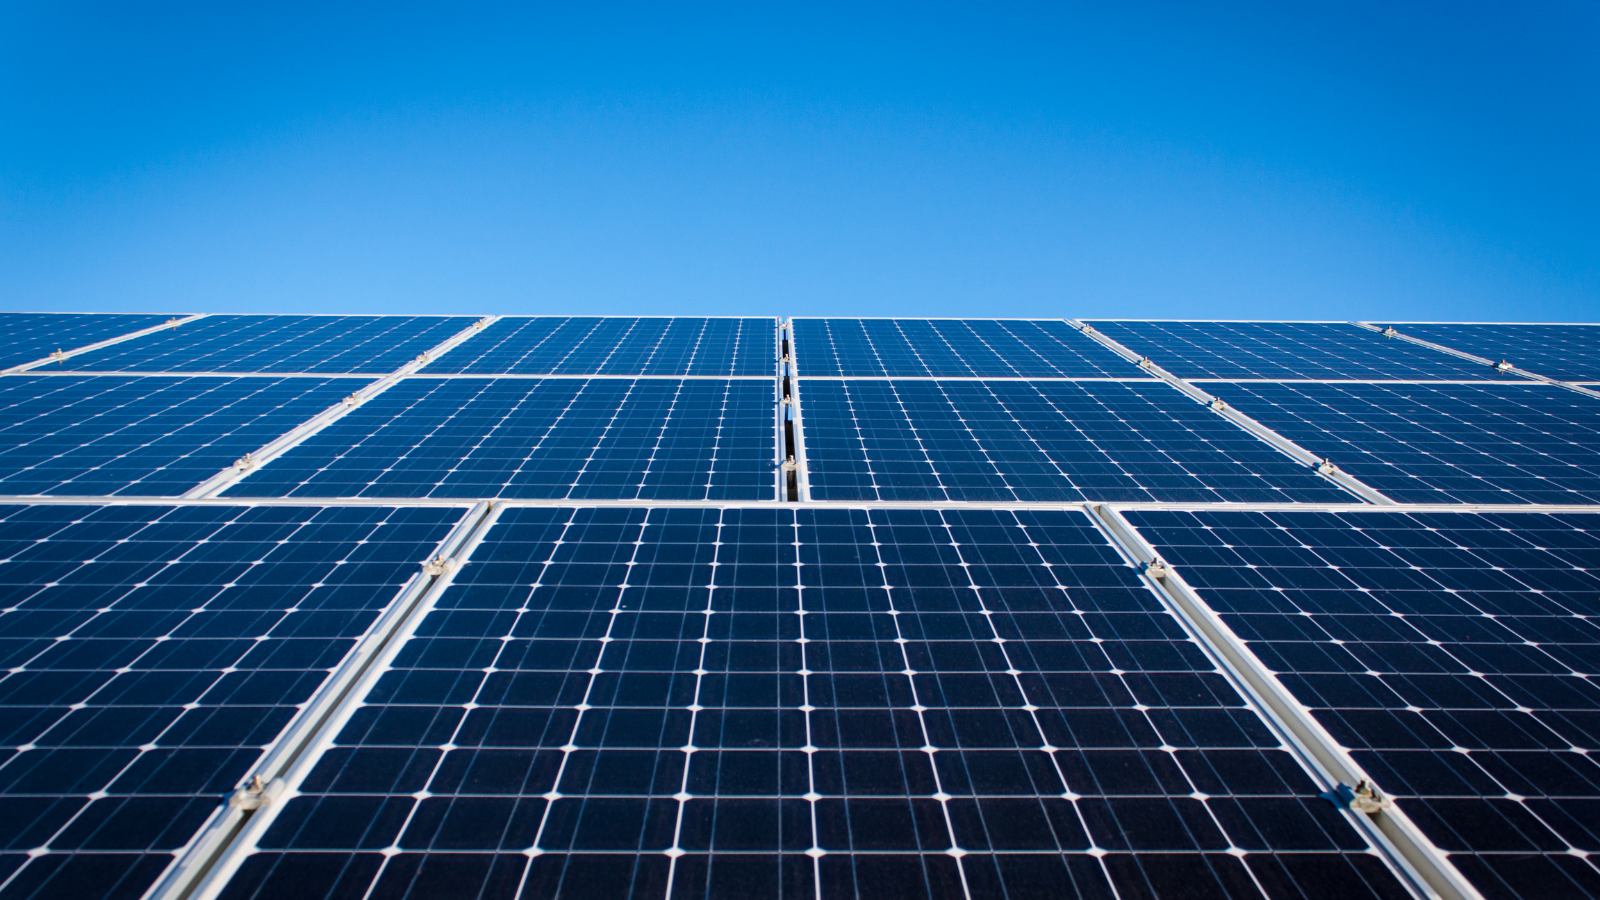 Commercial Solar PV: Avoid the Energy Crisis